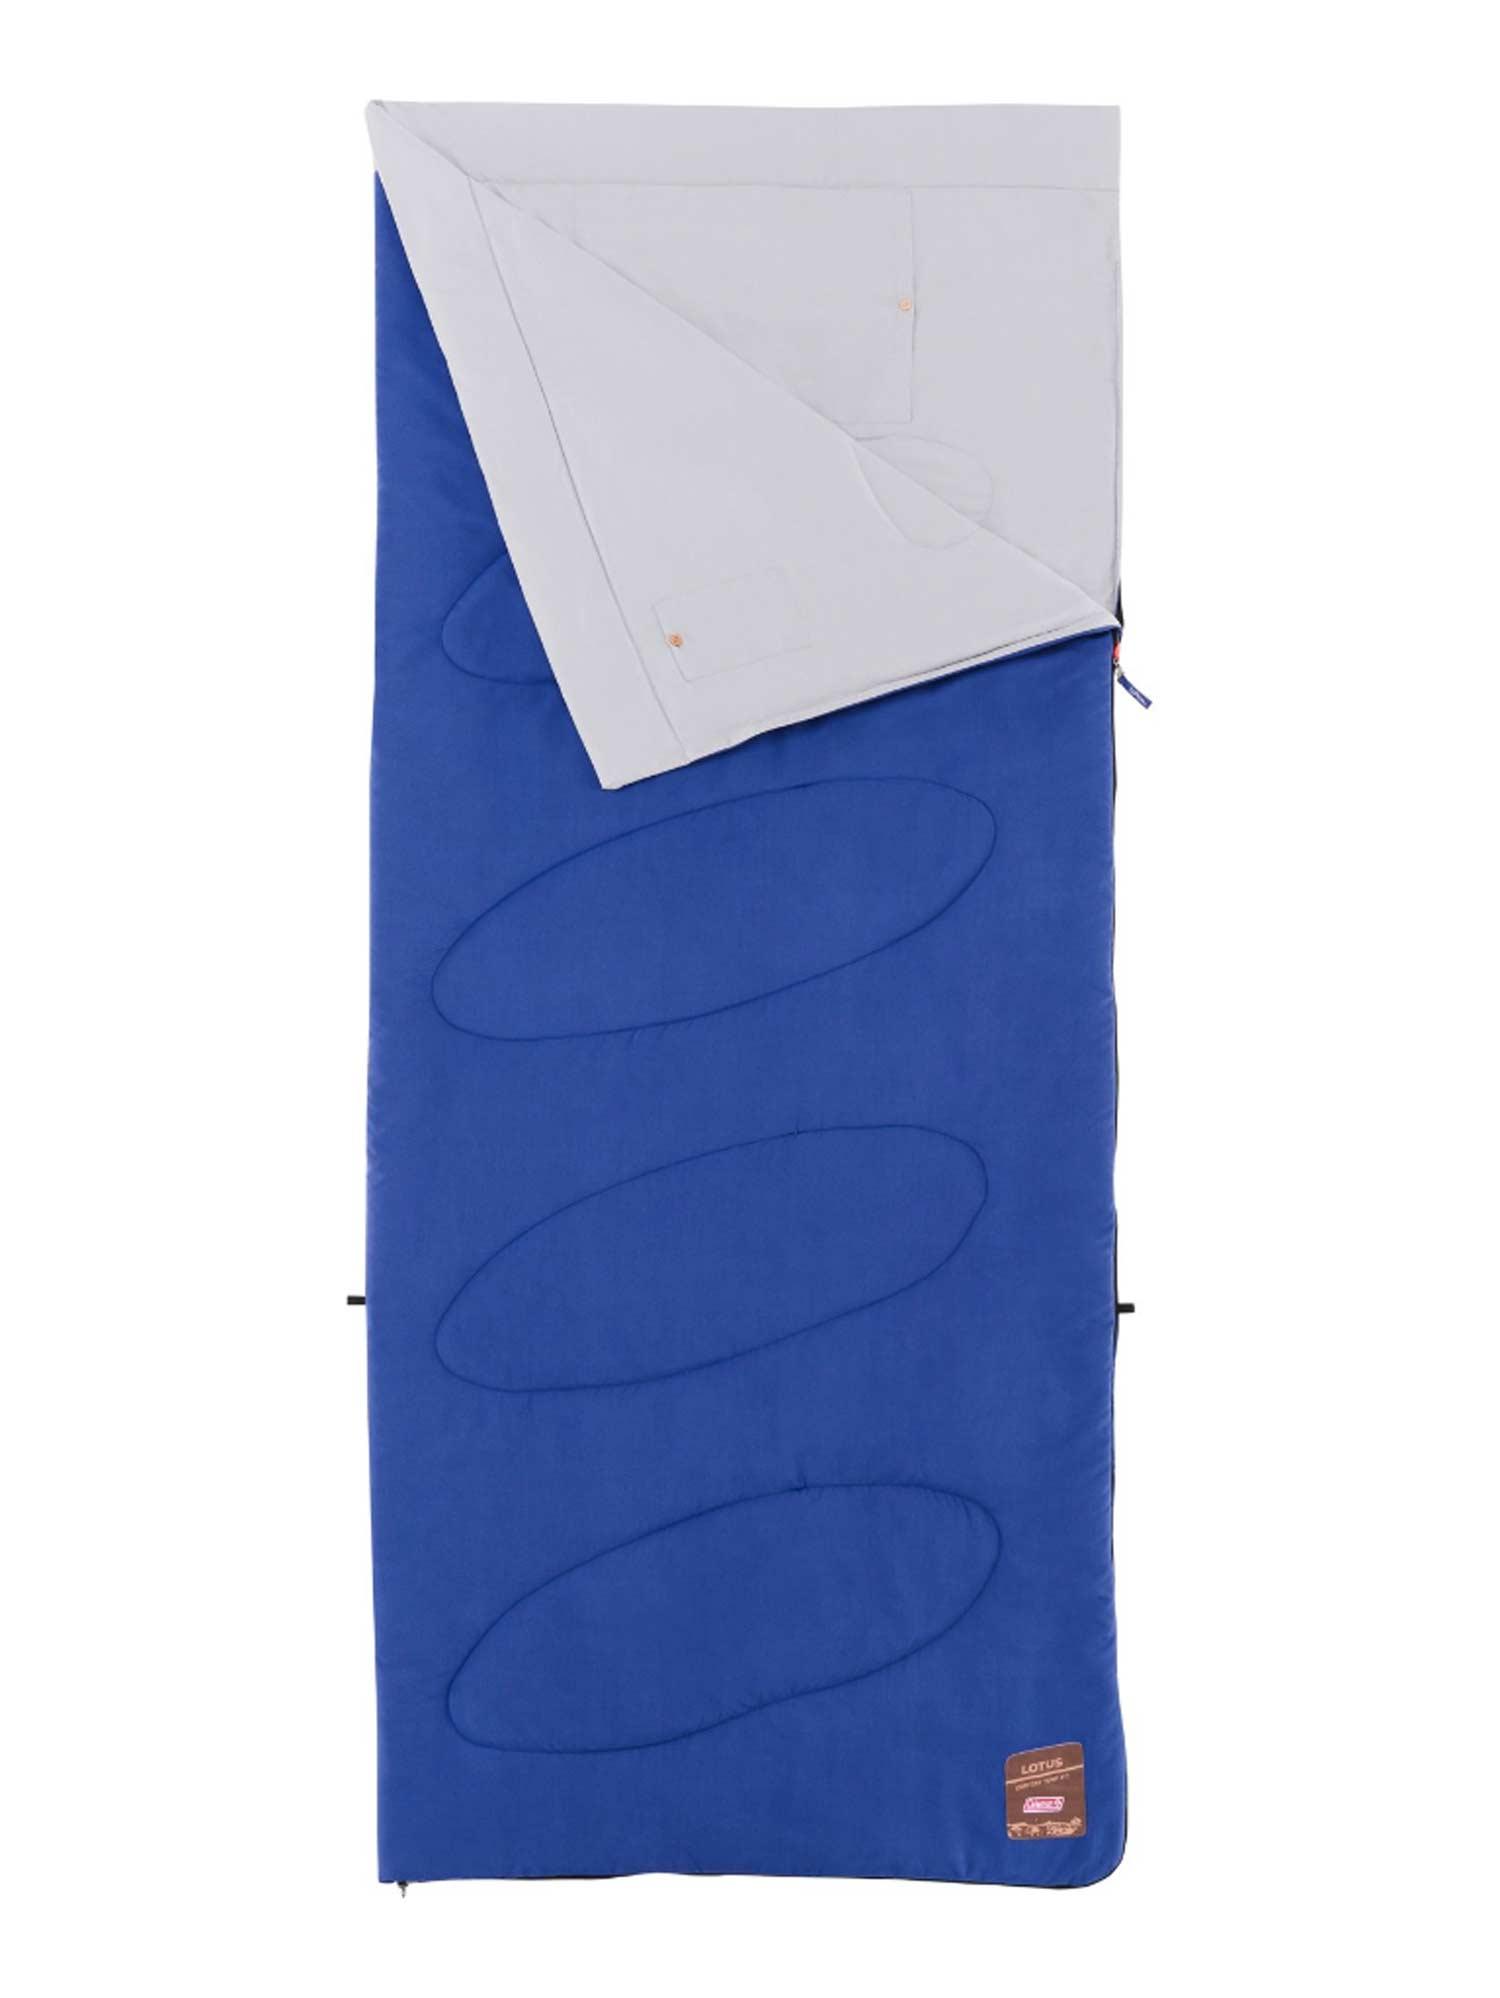 Selected image for COLEMAN Vreća za spavanje Lotus L Sleeping Bag plava